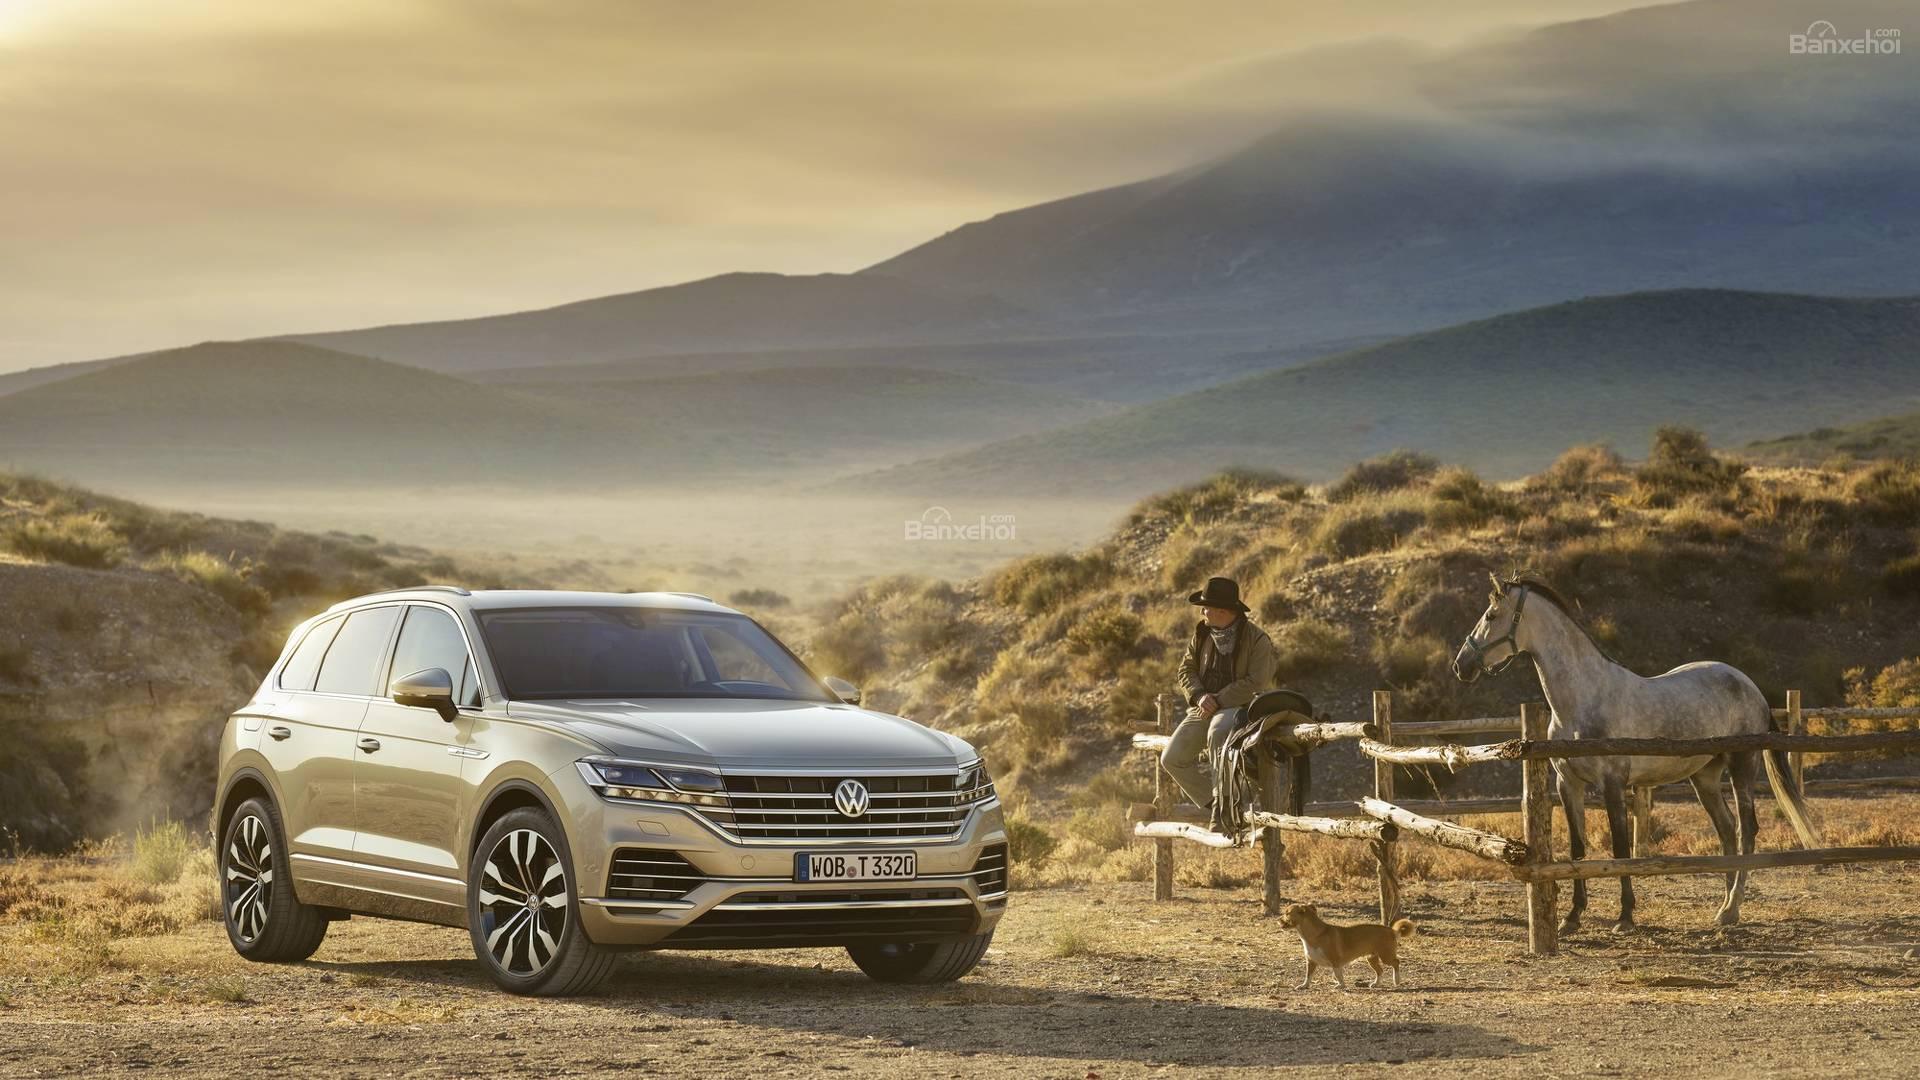 Tổng quát về Volkswagen Touareg 2019 2